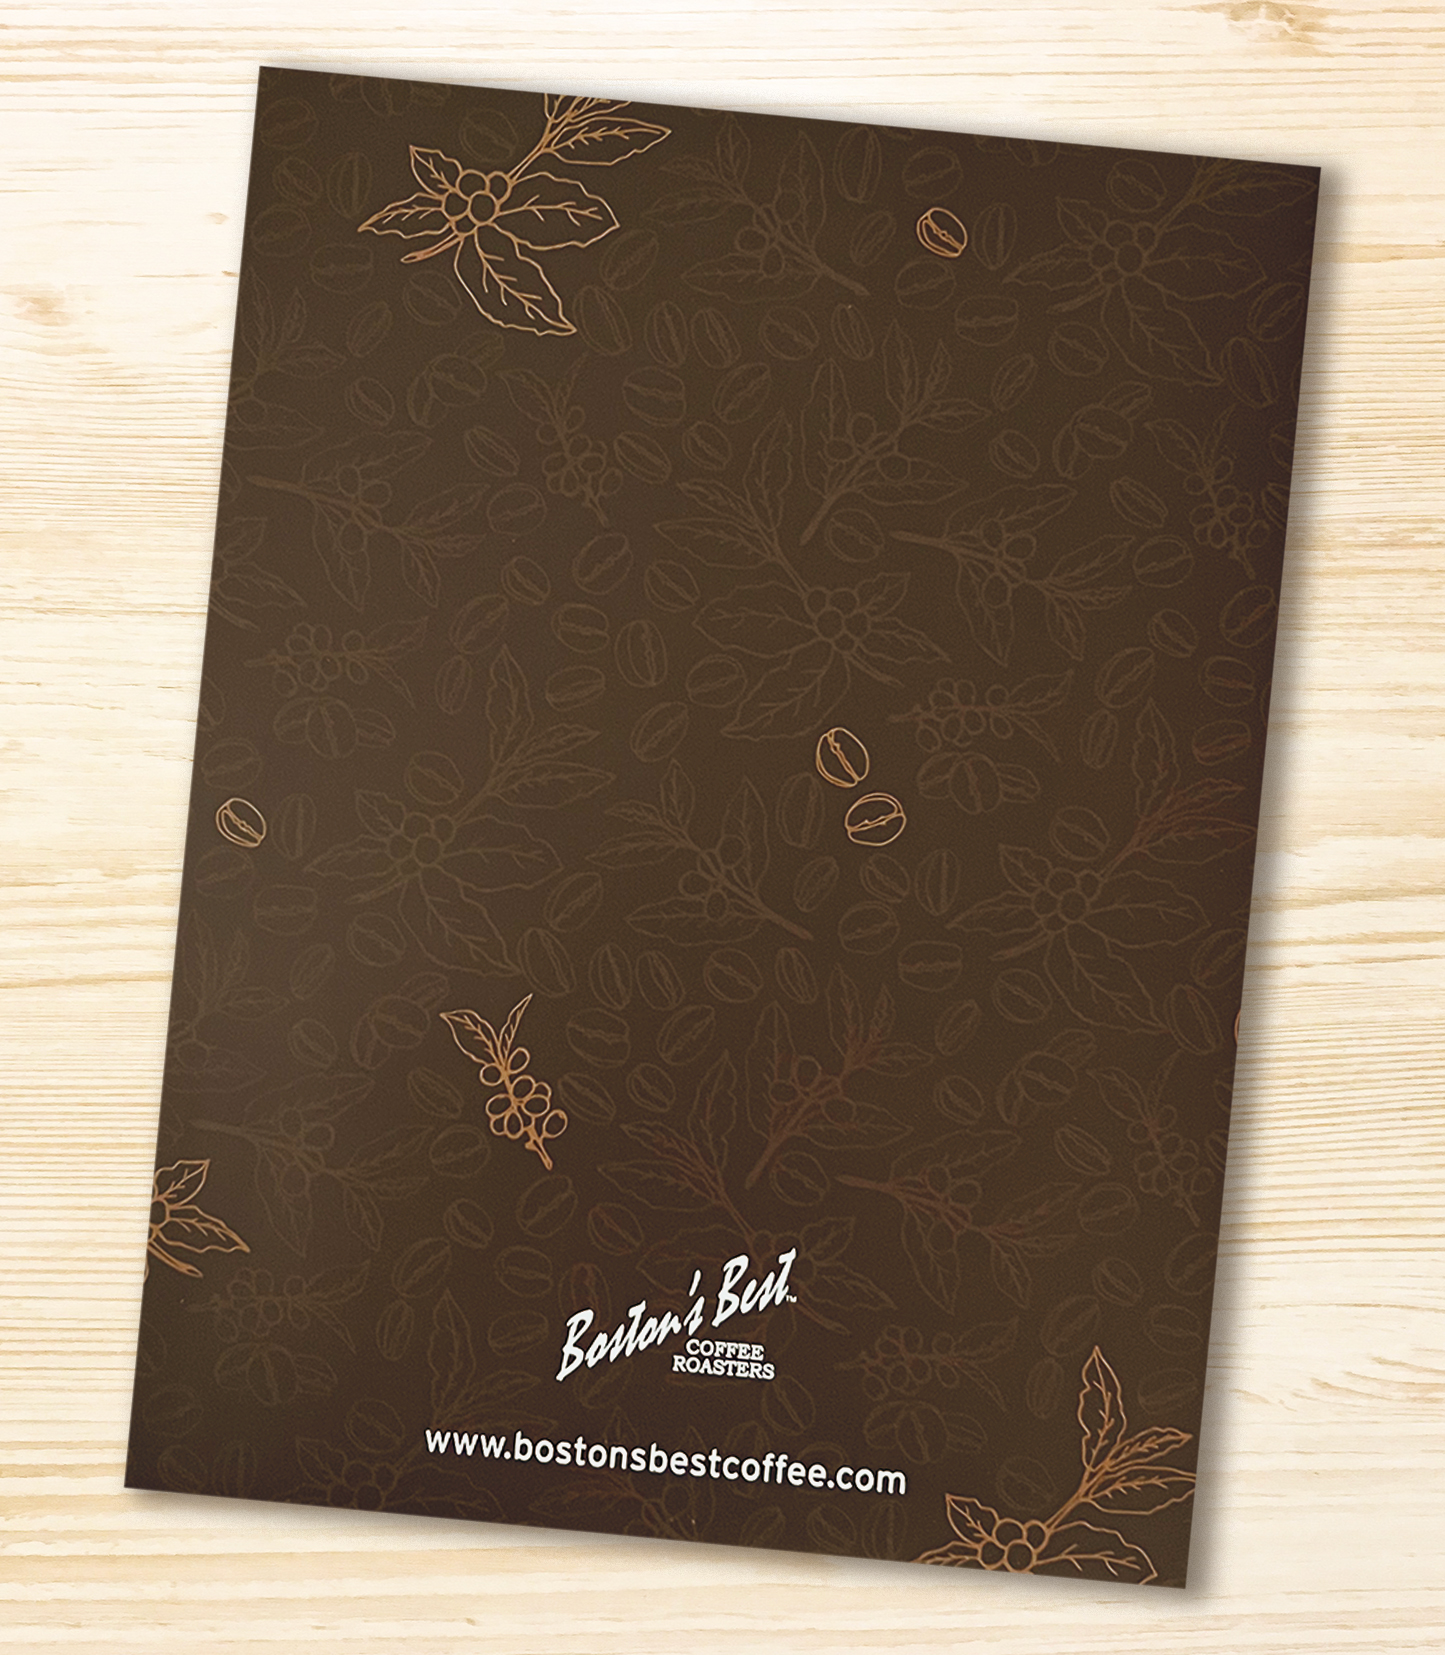 Back cover of Boston's Best Coffee's folders.